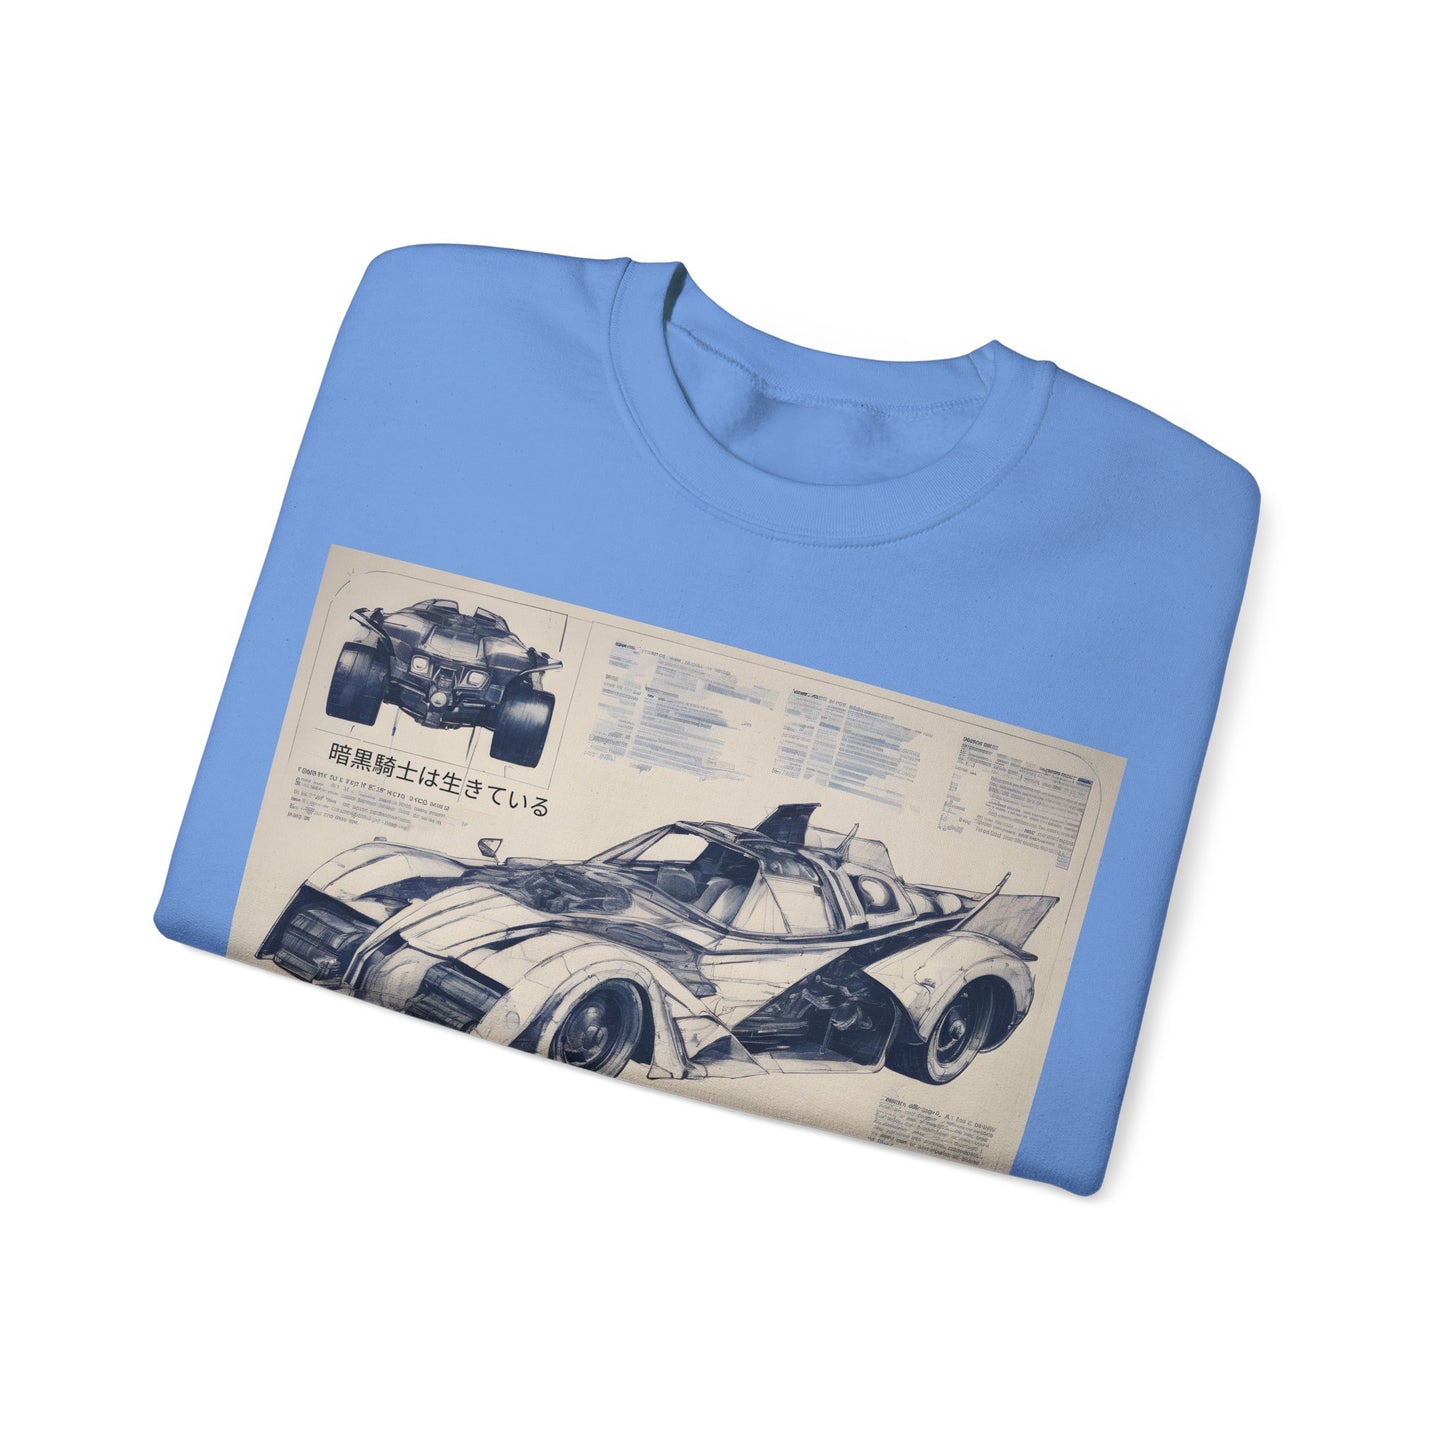 "Automobiliá de Chiroptera" Double Print Unisex Heavy Blend™ Crewneck Sweatshirt